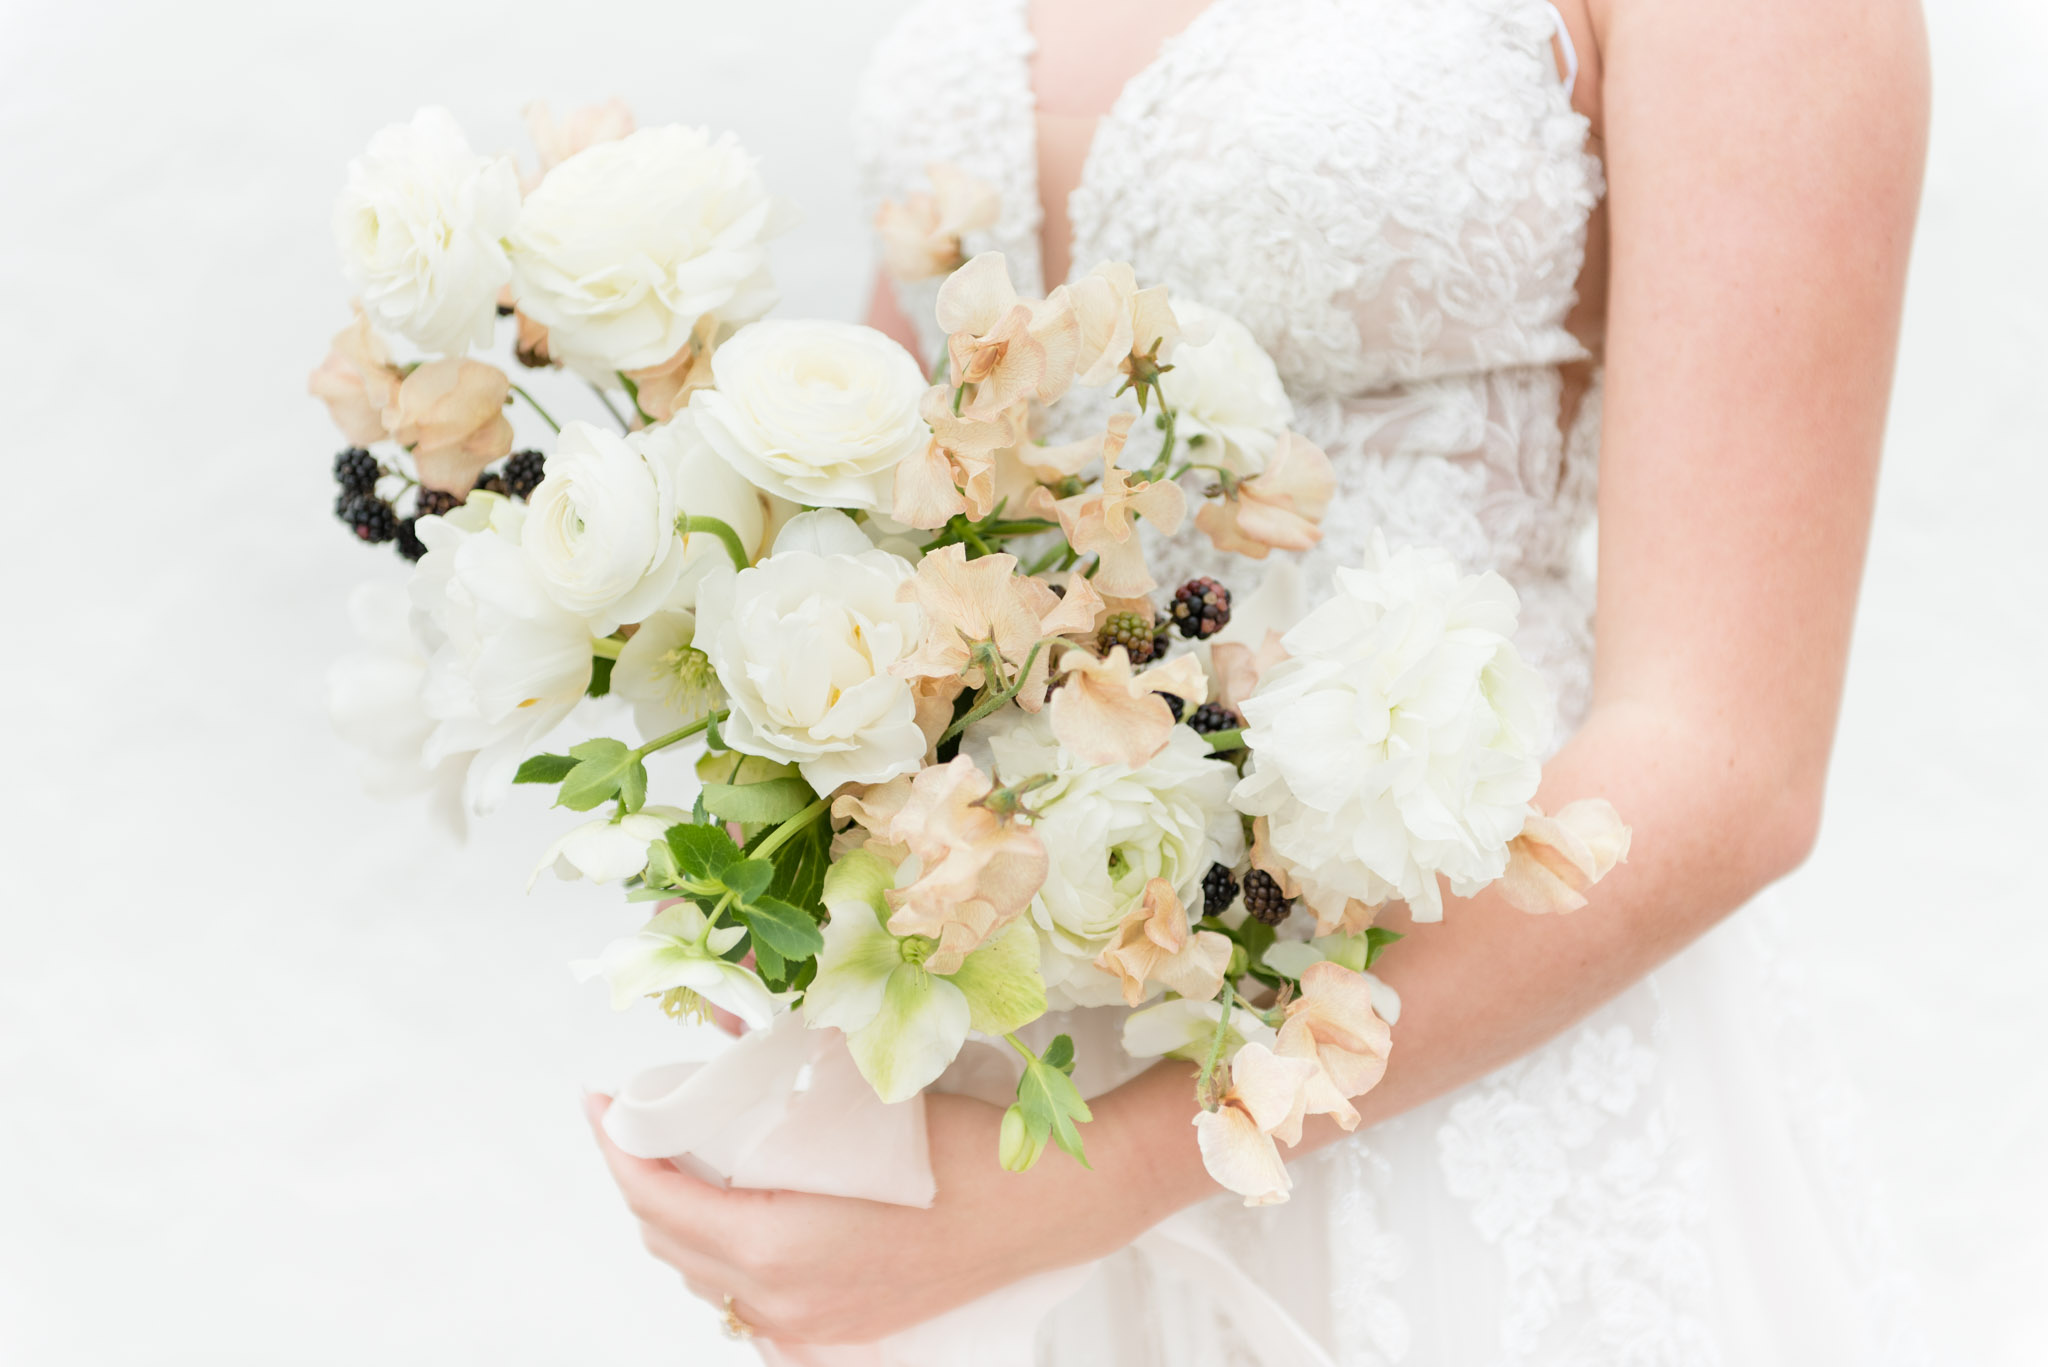 Blush and white bouquet closeup.